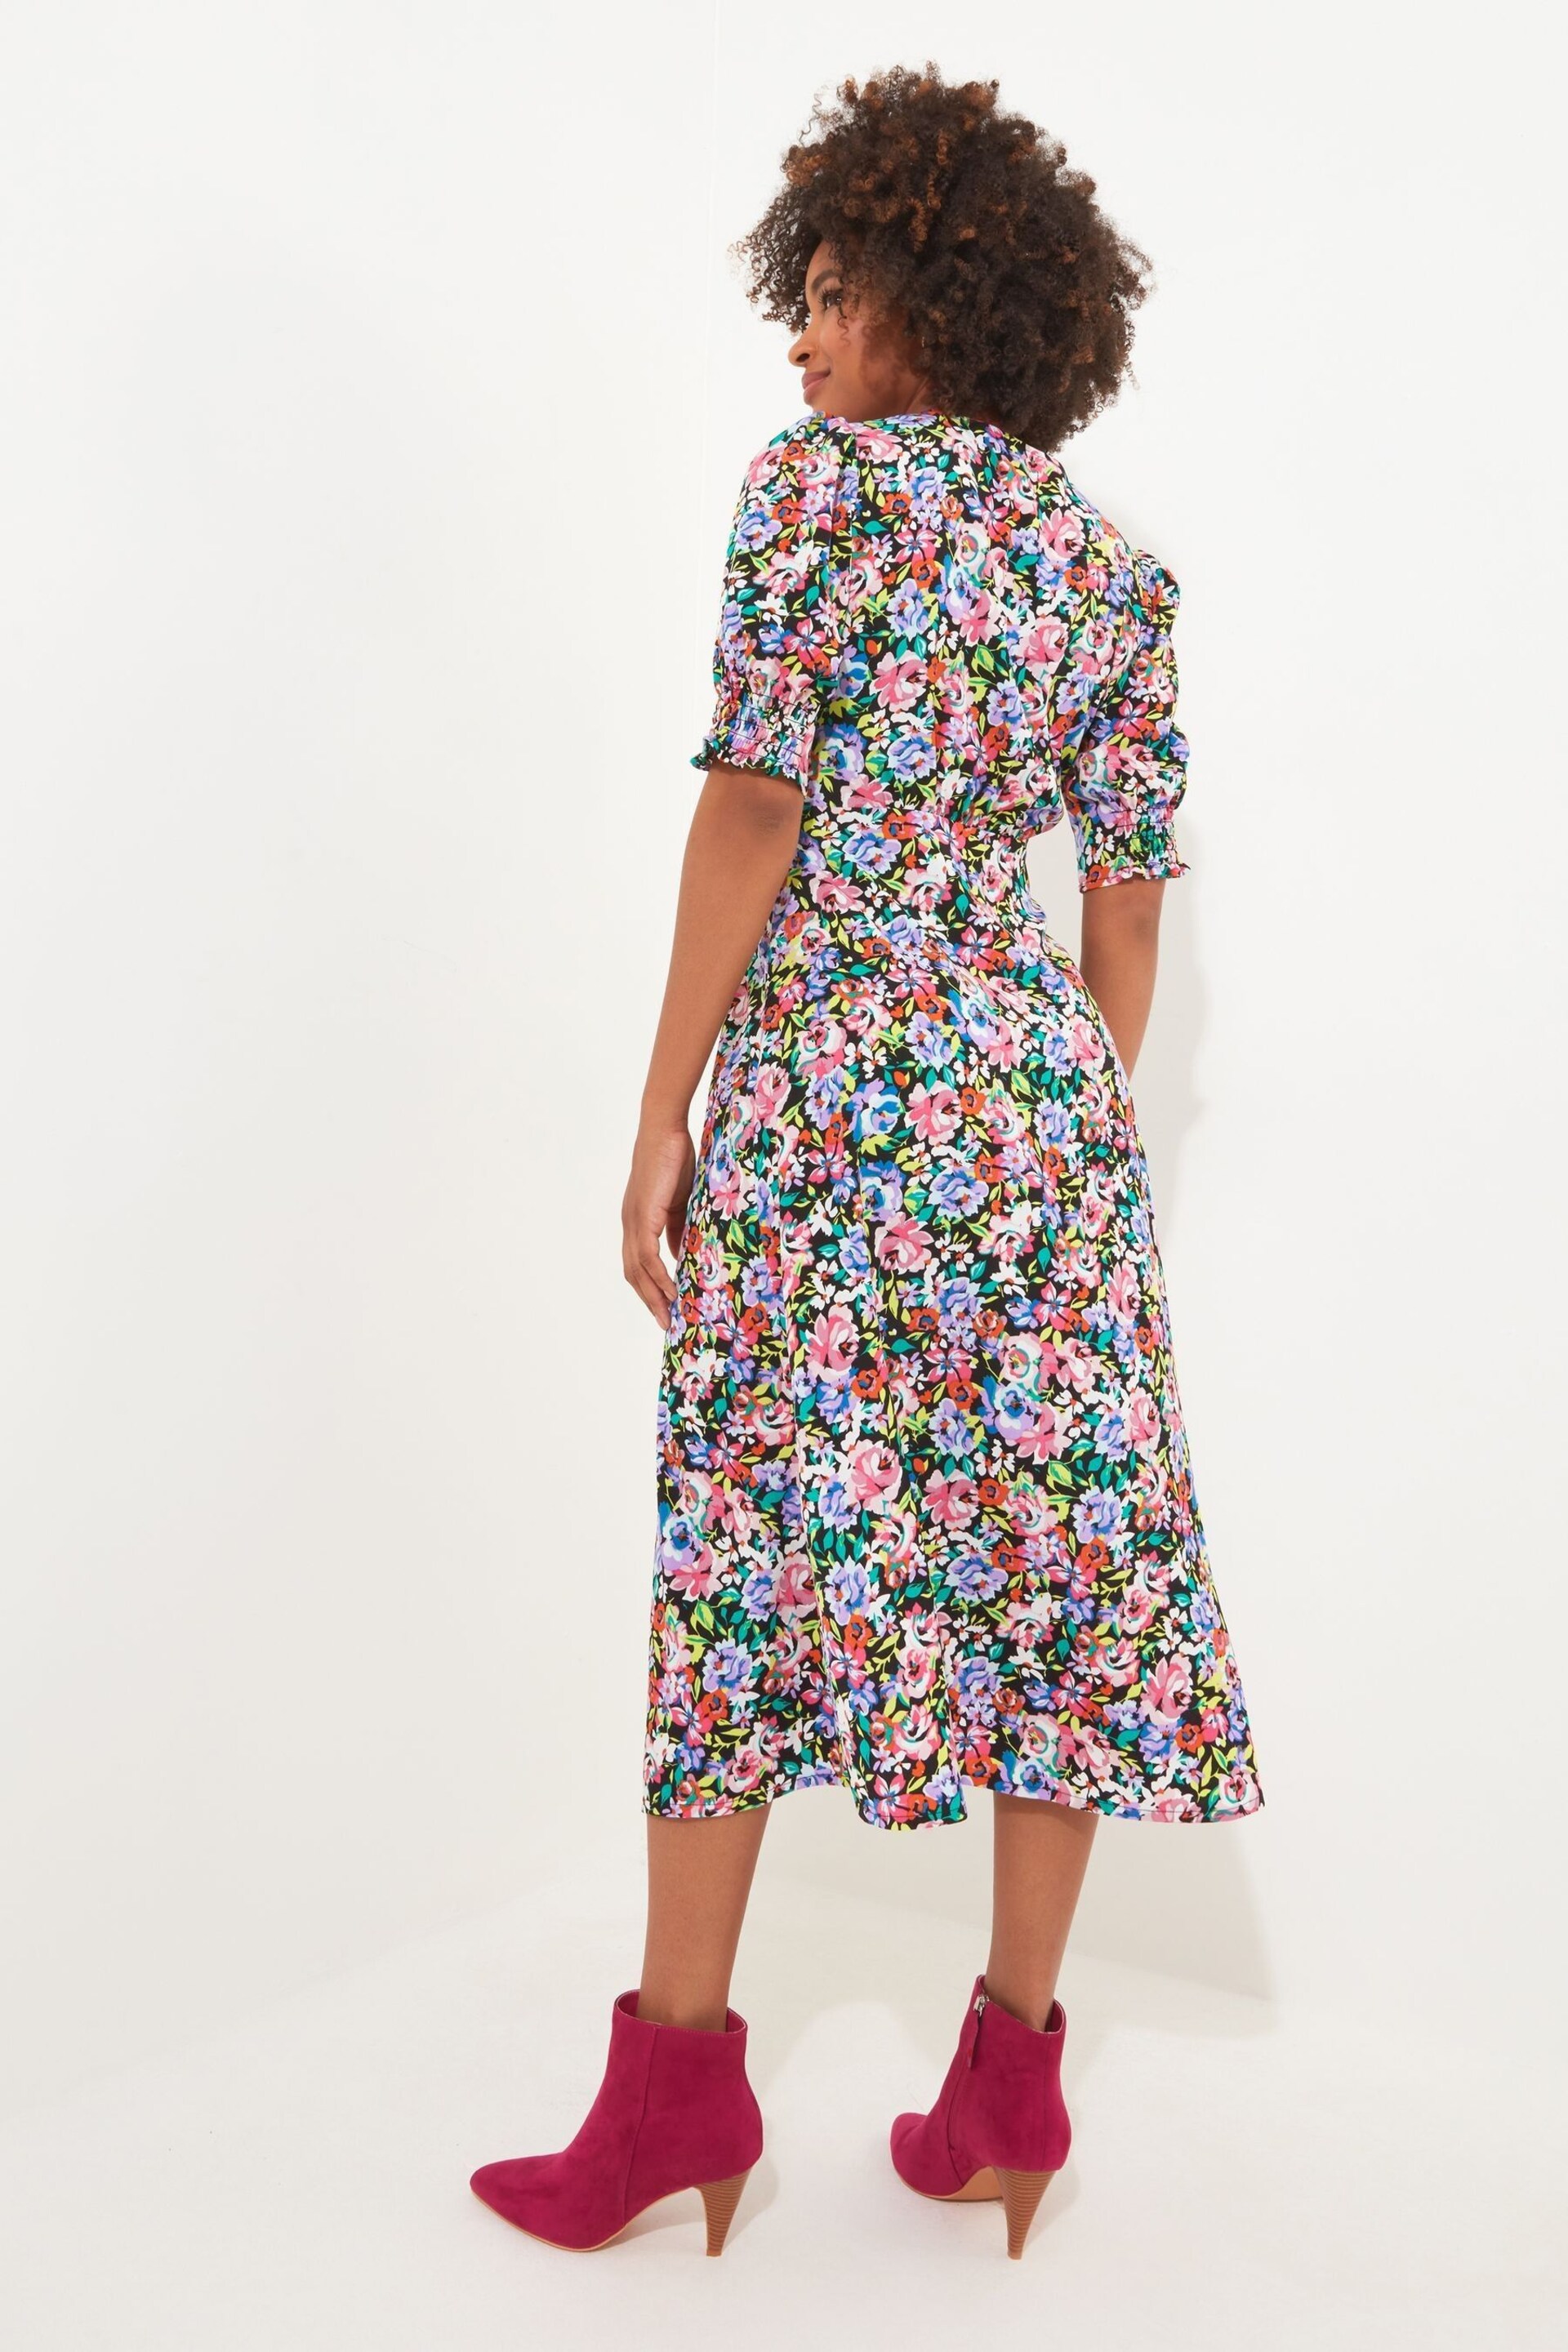 Joe Browns Multi Neon Pop Floral Midi Dress - Image 4 of 7